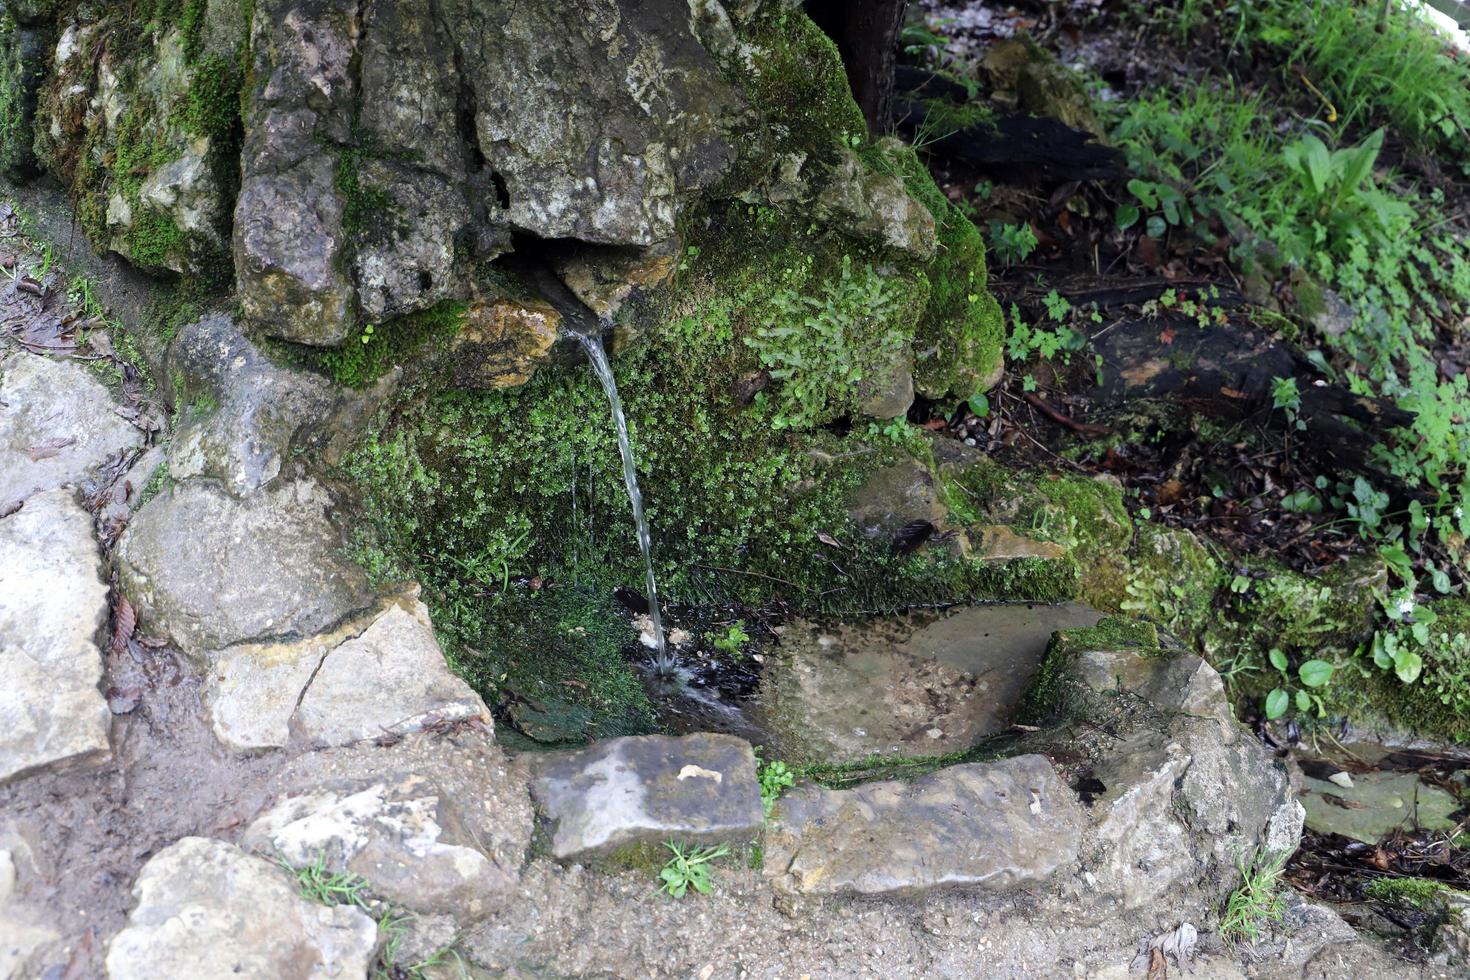 ver de s claro corriente de agua fluido fuera de un hendedura Entre rocas en un montaña bosque. foto